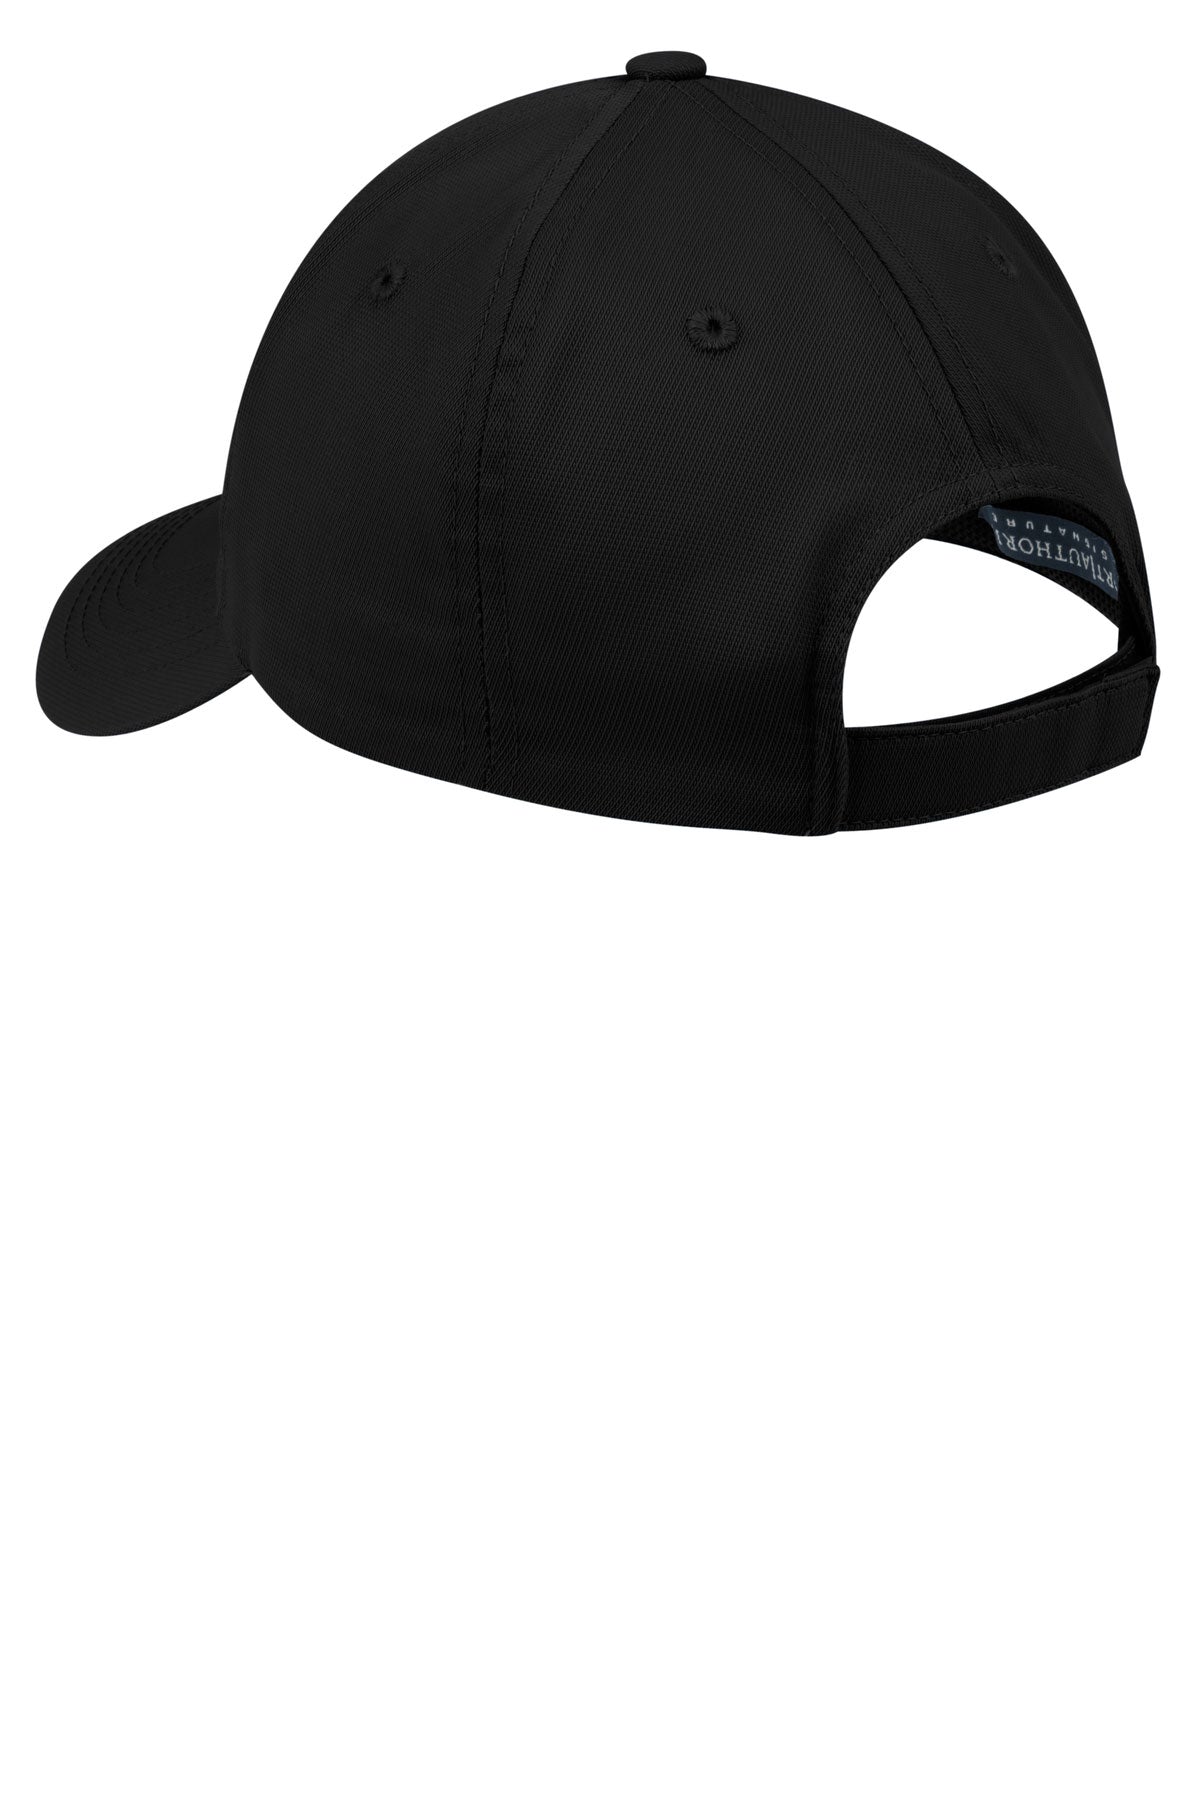 Port Authority Nylon Twill Custom Performance Caps, Black